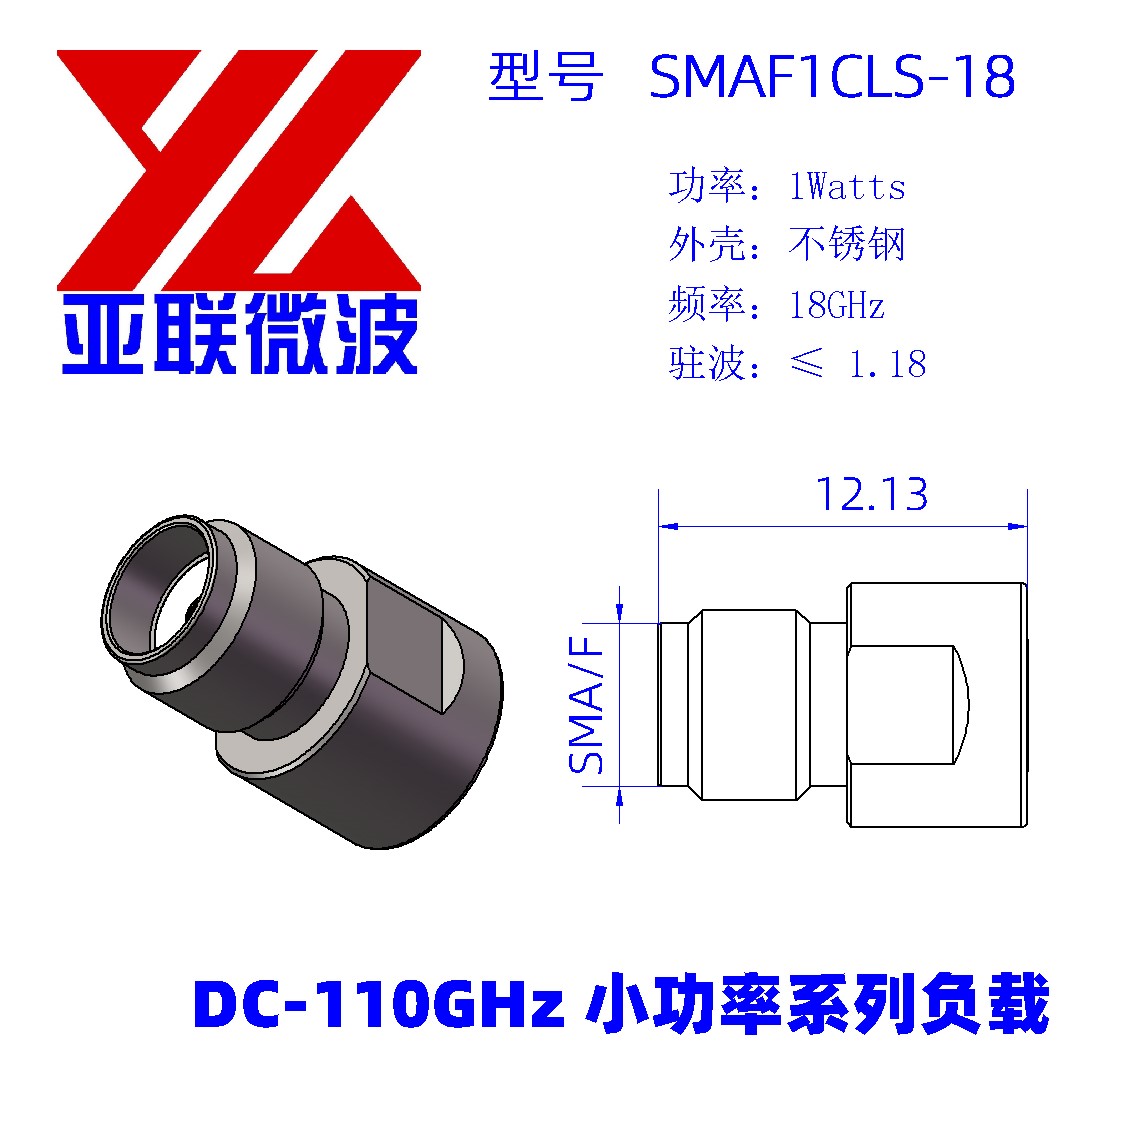 SMAF1CL-18装配体